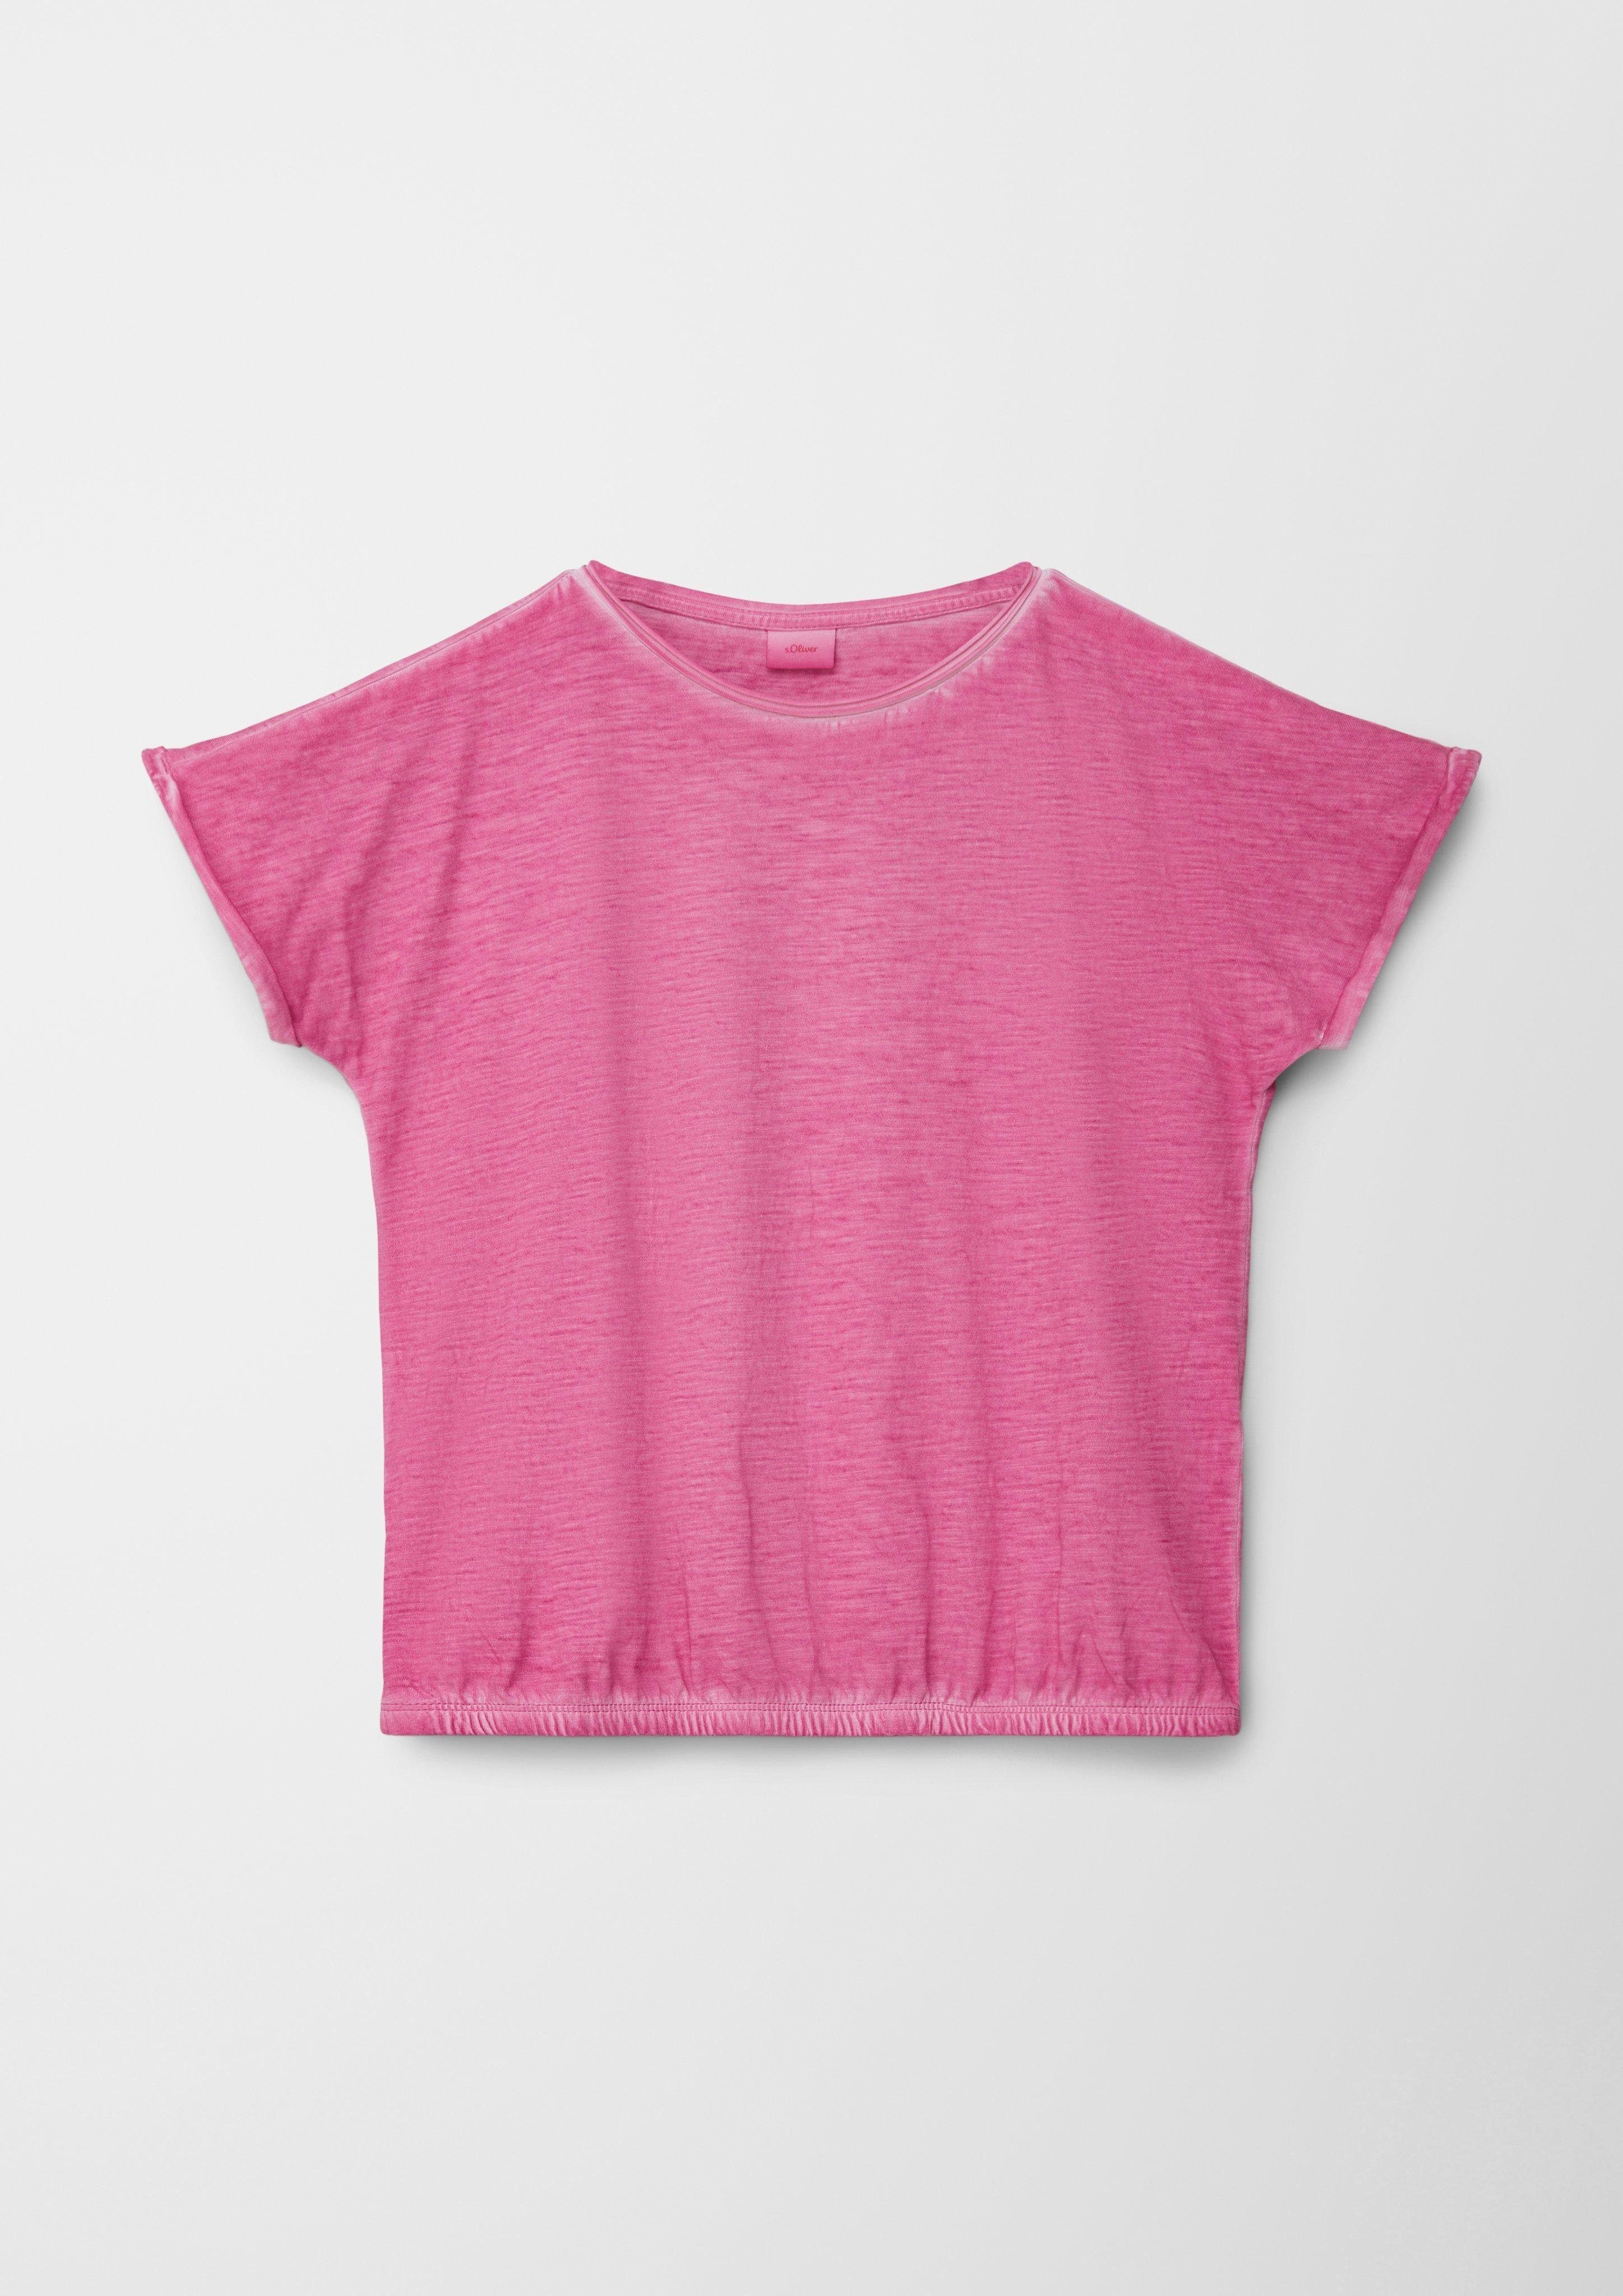 Kurzarmshirt T-Shirt s.Oliver Baumwolle aus pink